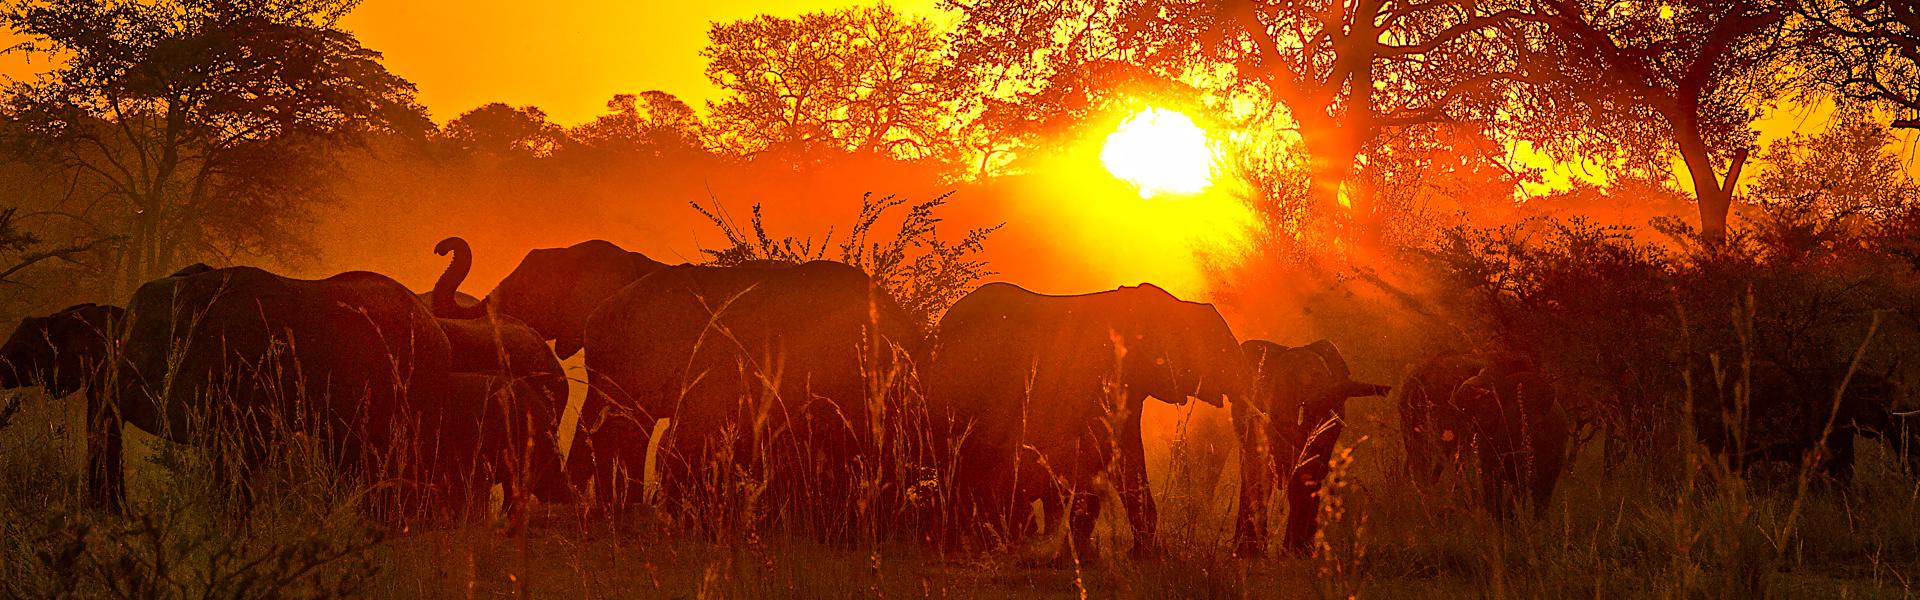 Sundowner mit Elefanten |  Peter Pack, Pack Safari / Chamleon